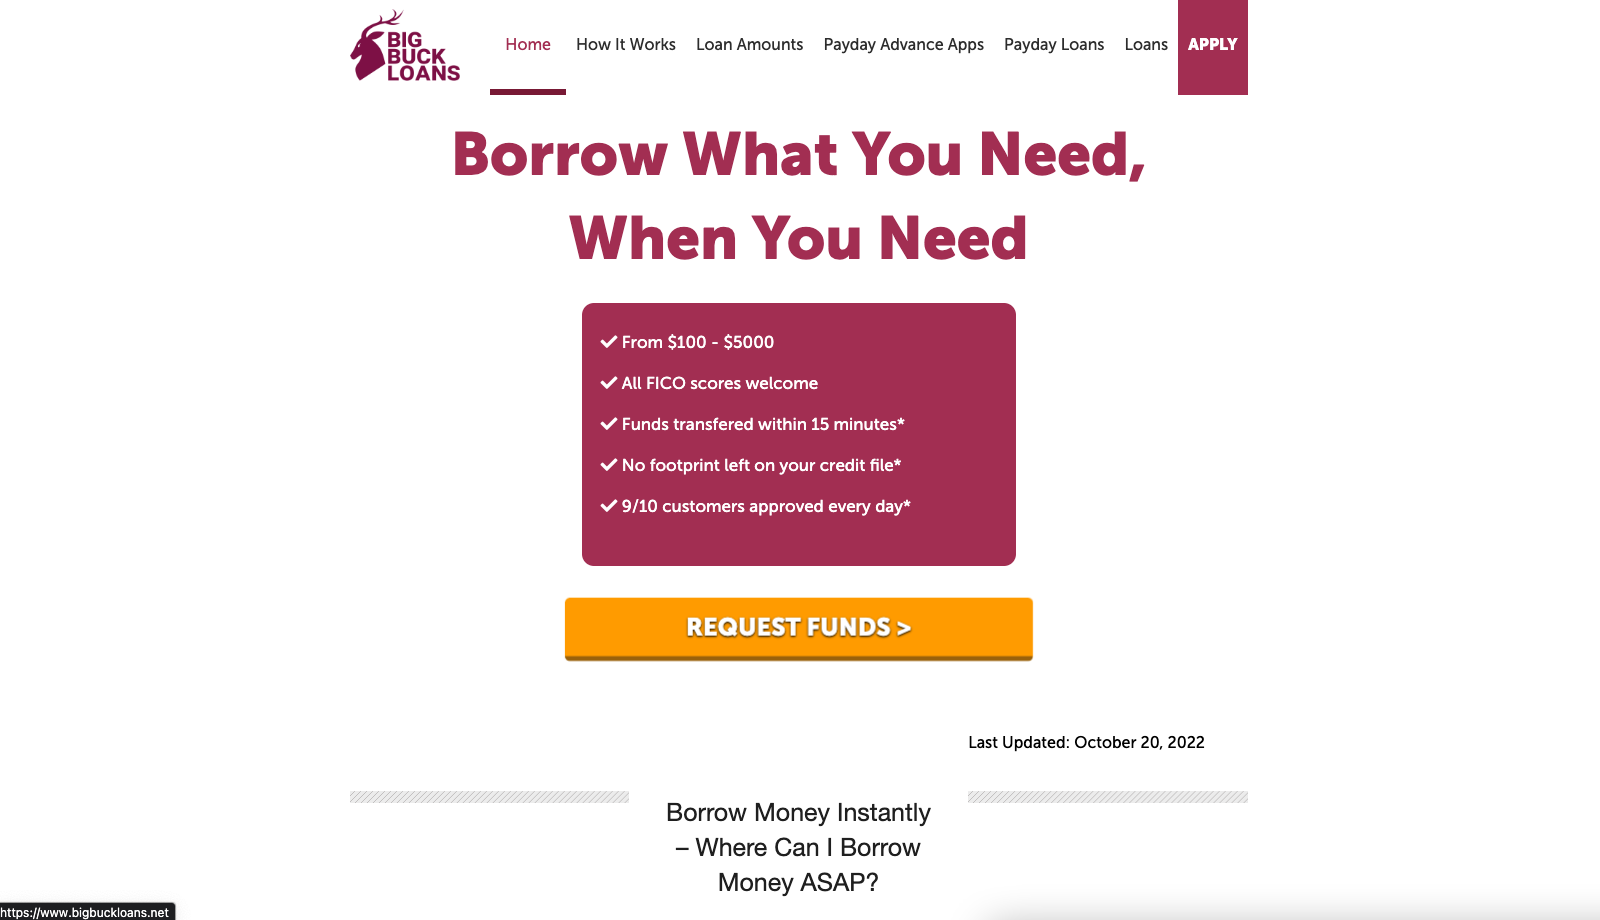 bigbuckloans-usa-loans